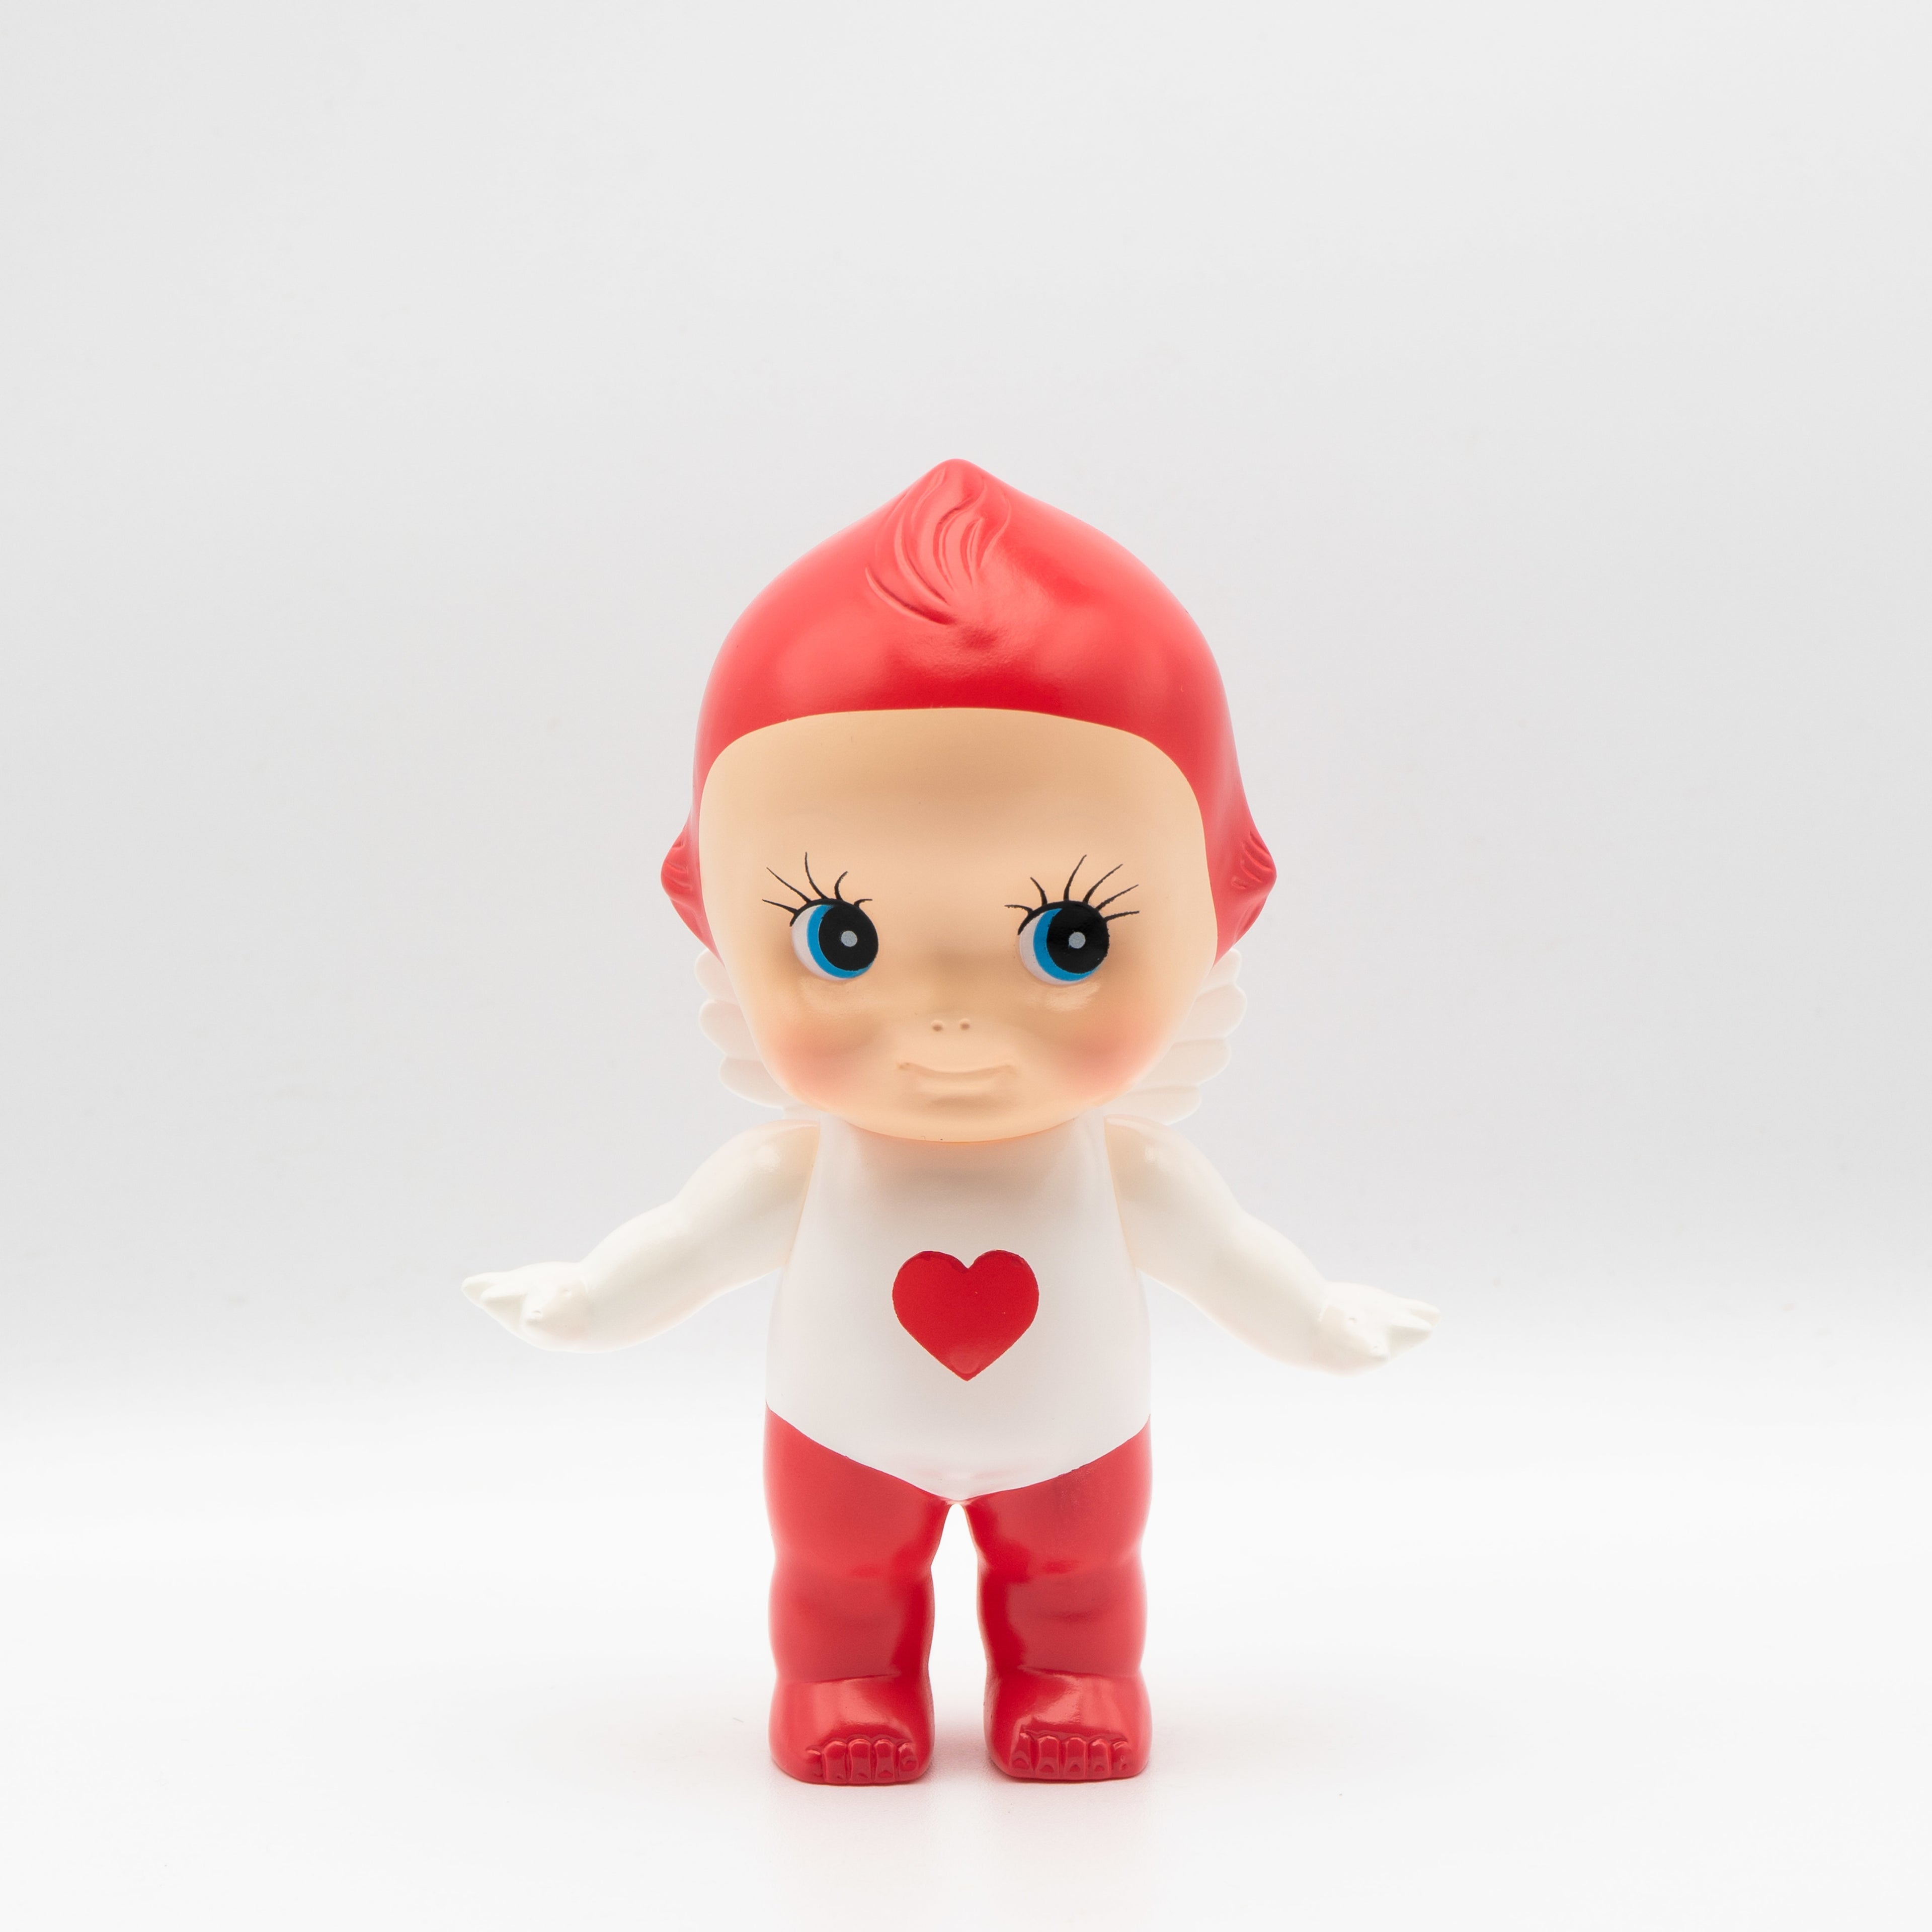 Obitsu Kewpie Doll - “Wonderland” special version